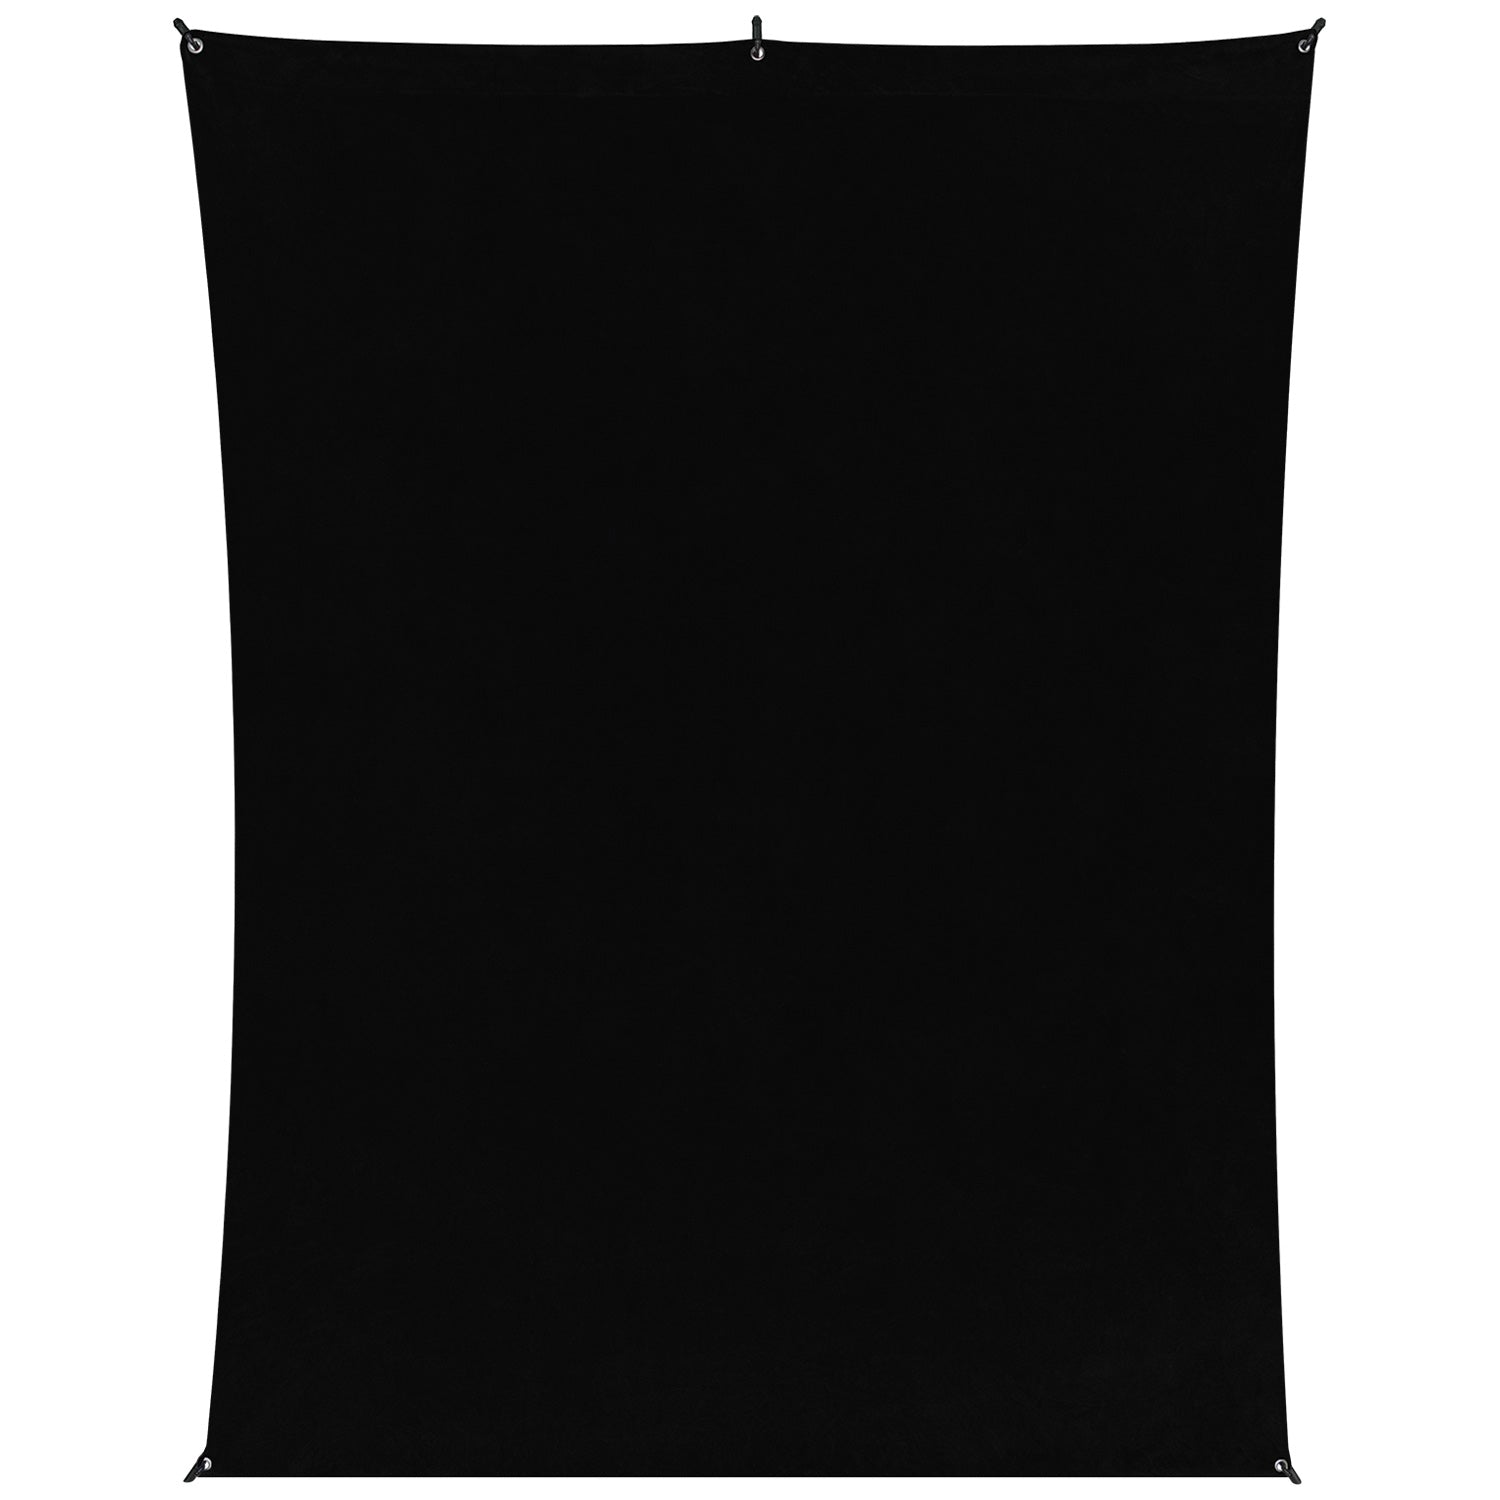 X-Drop Wrinkle-Resistant Backdrop Kit - Rich Black (5' x 7')